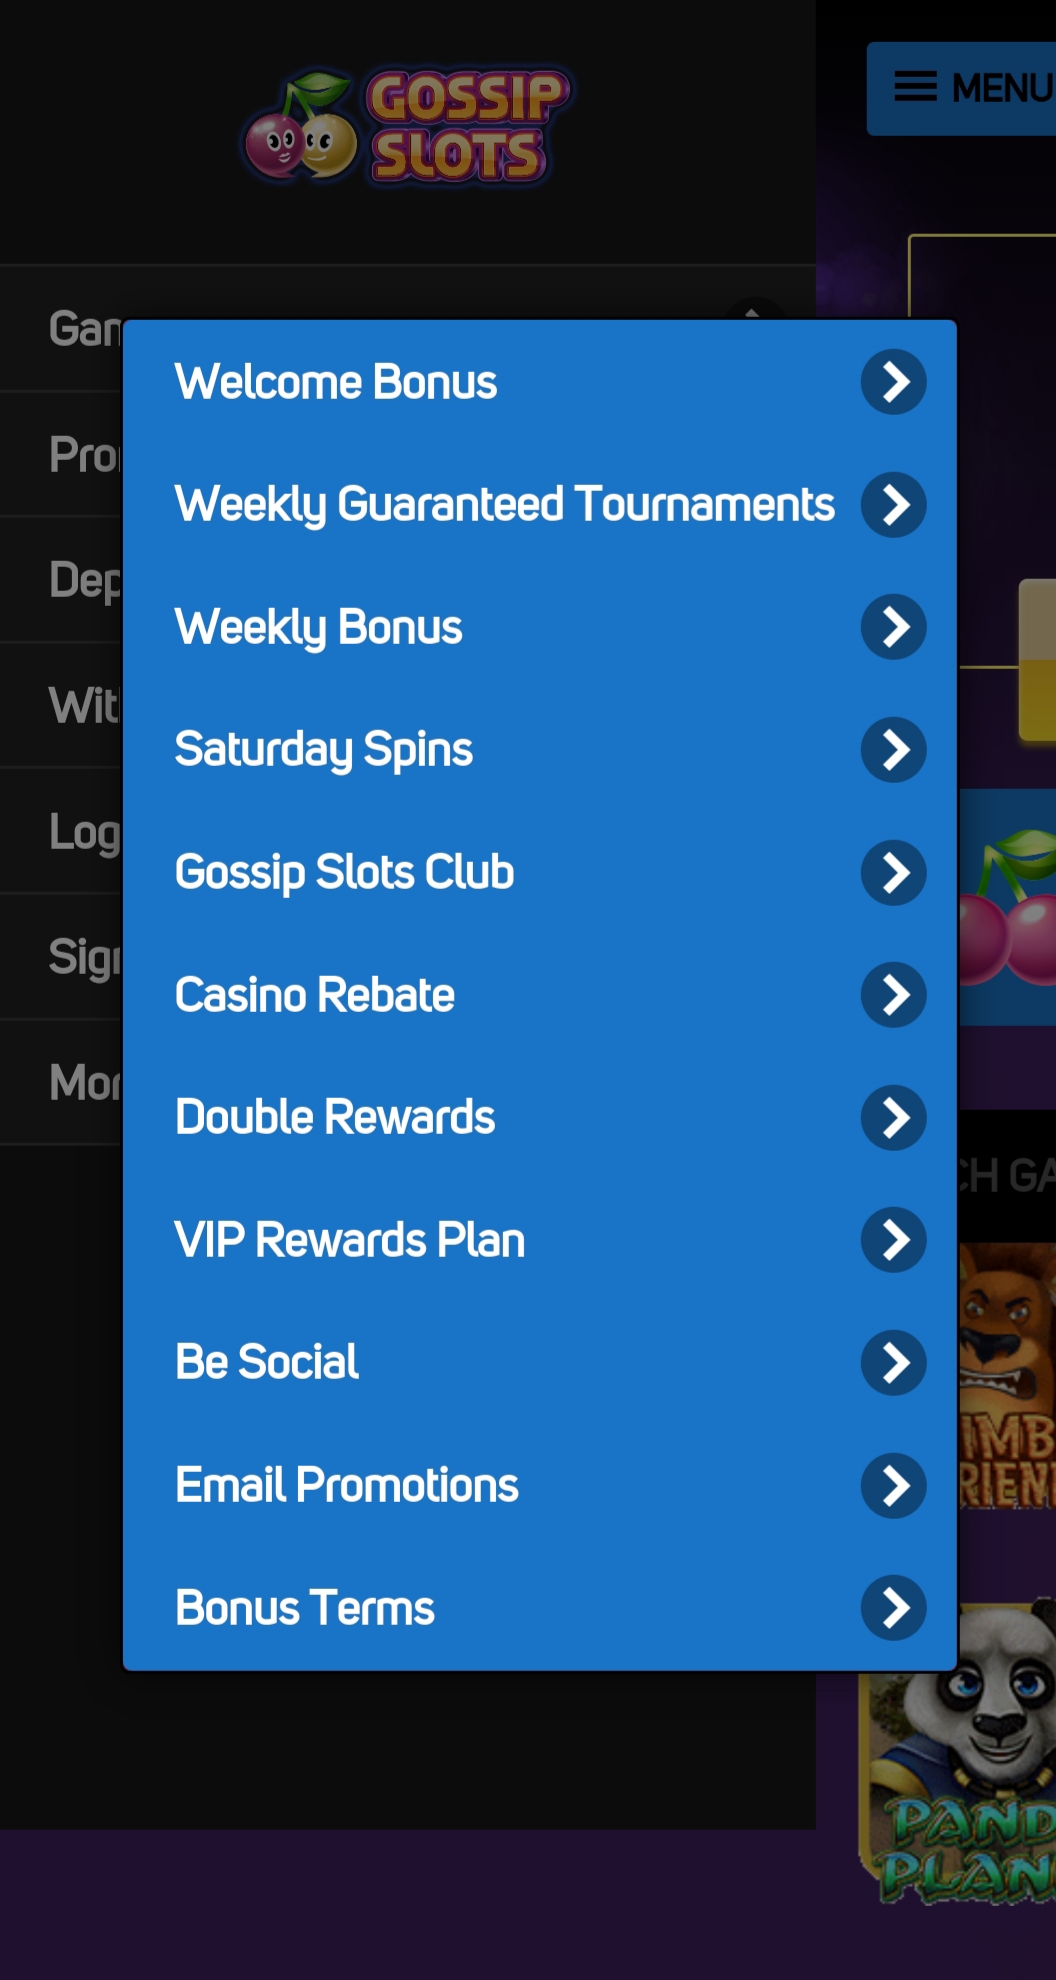 Gossip Slots Casino Mobile No Deposit Bonus Review